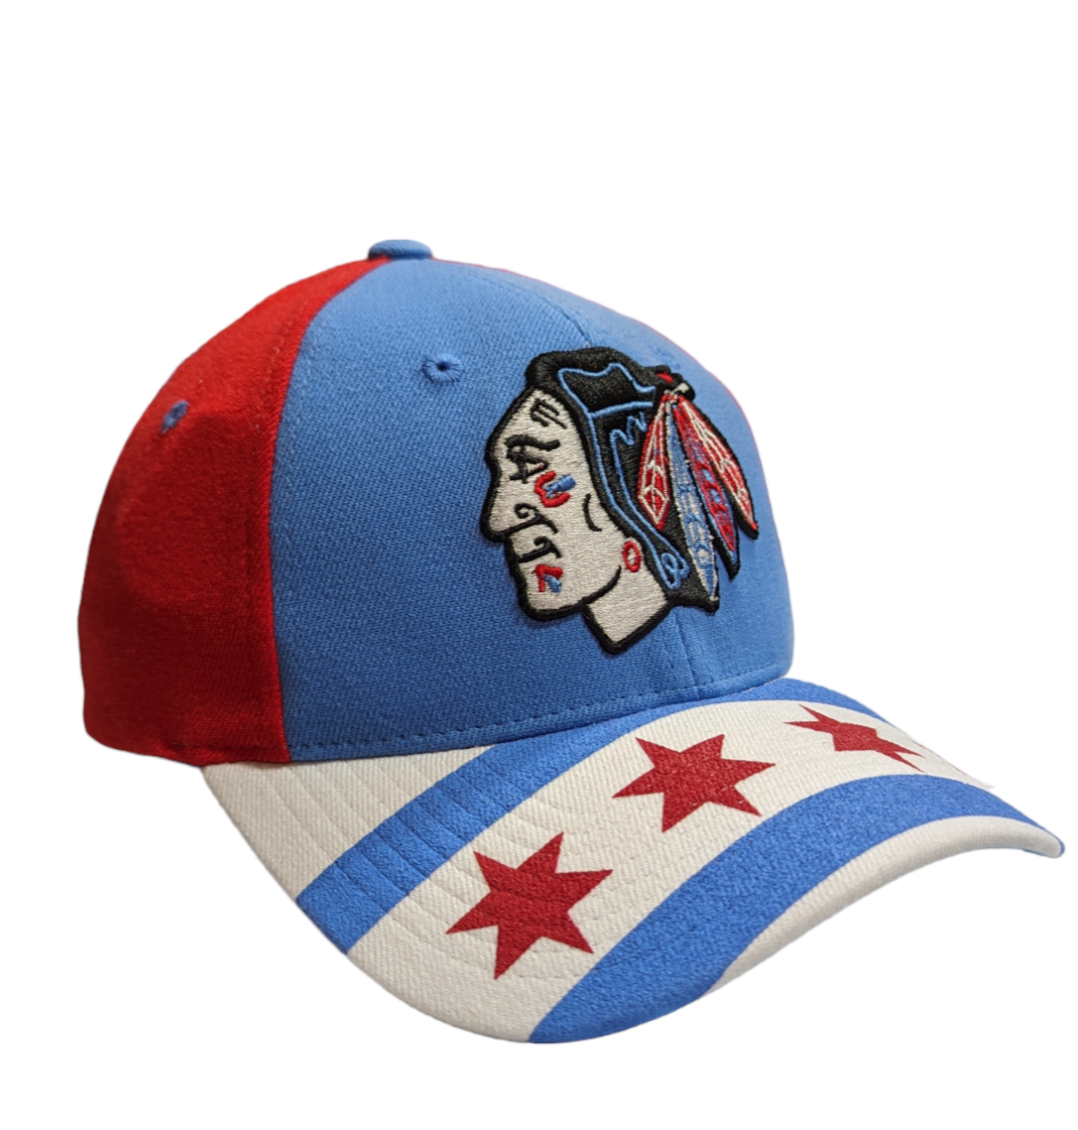 Mens NHL Chicago Blackhawks City Flag Blue/Red Zephyr Flex Hat